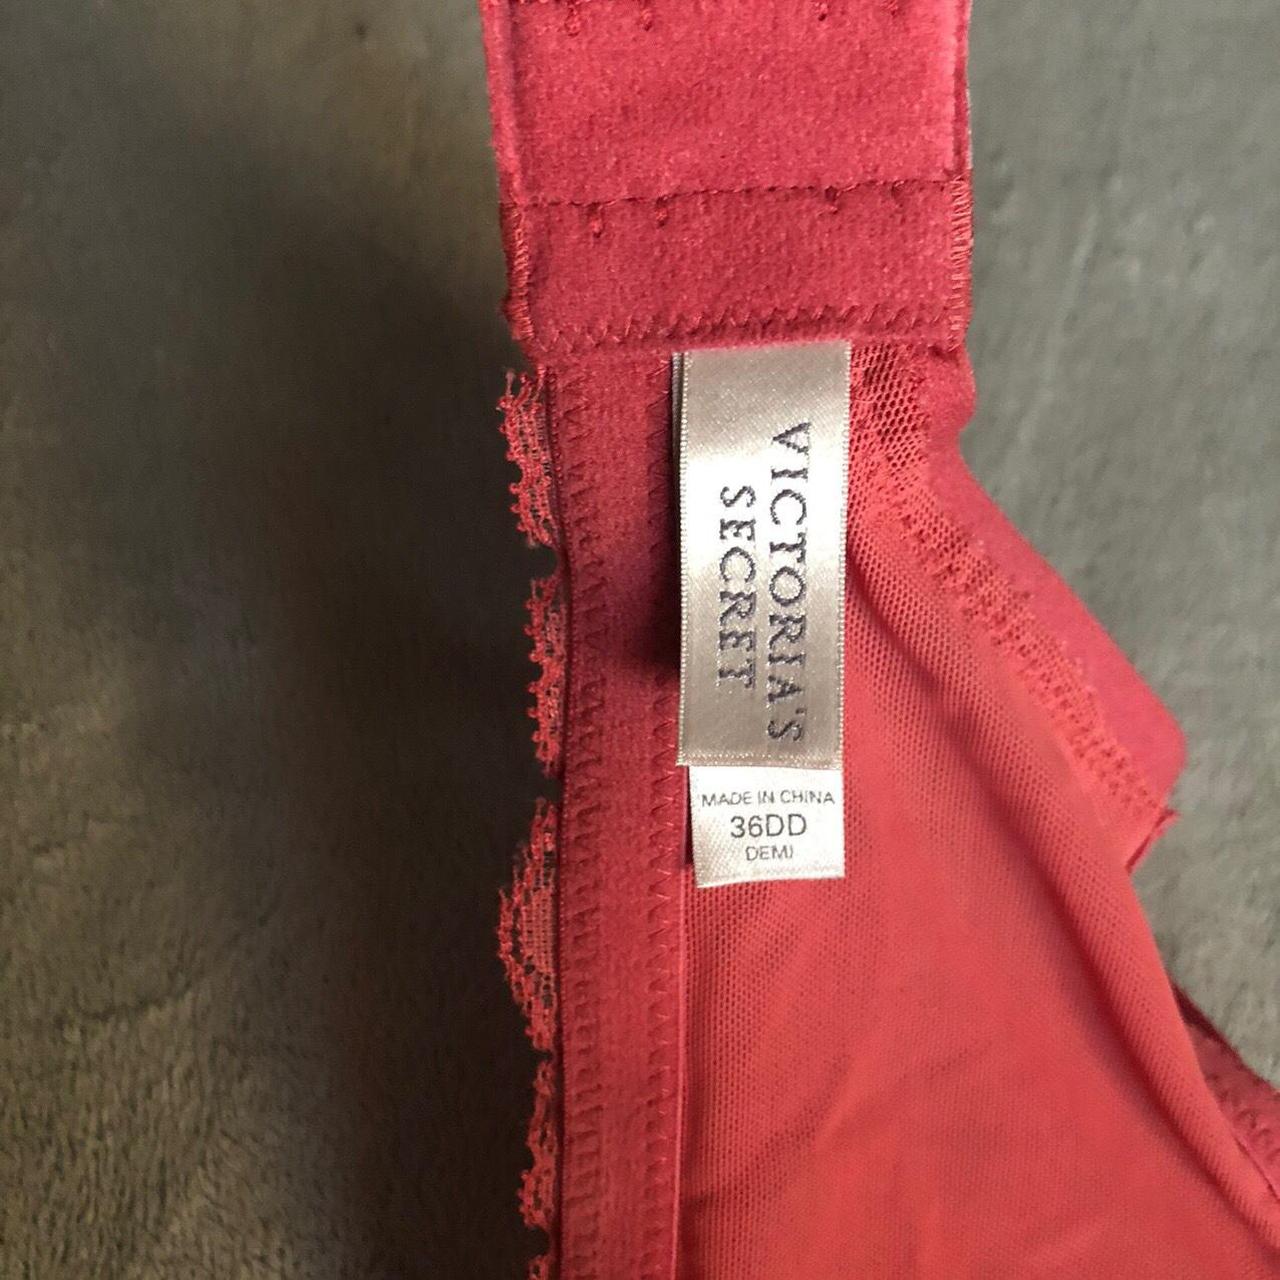 Product Image 4 - victoria’s secret demi bra, pinkish-red,